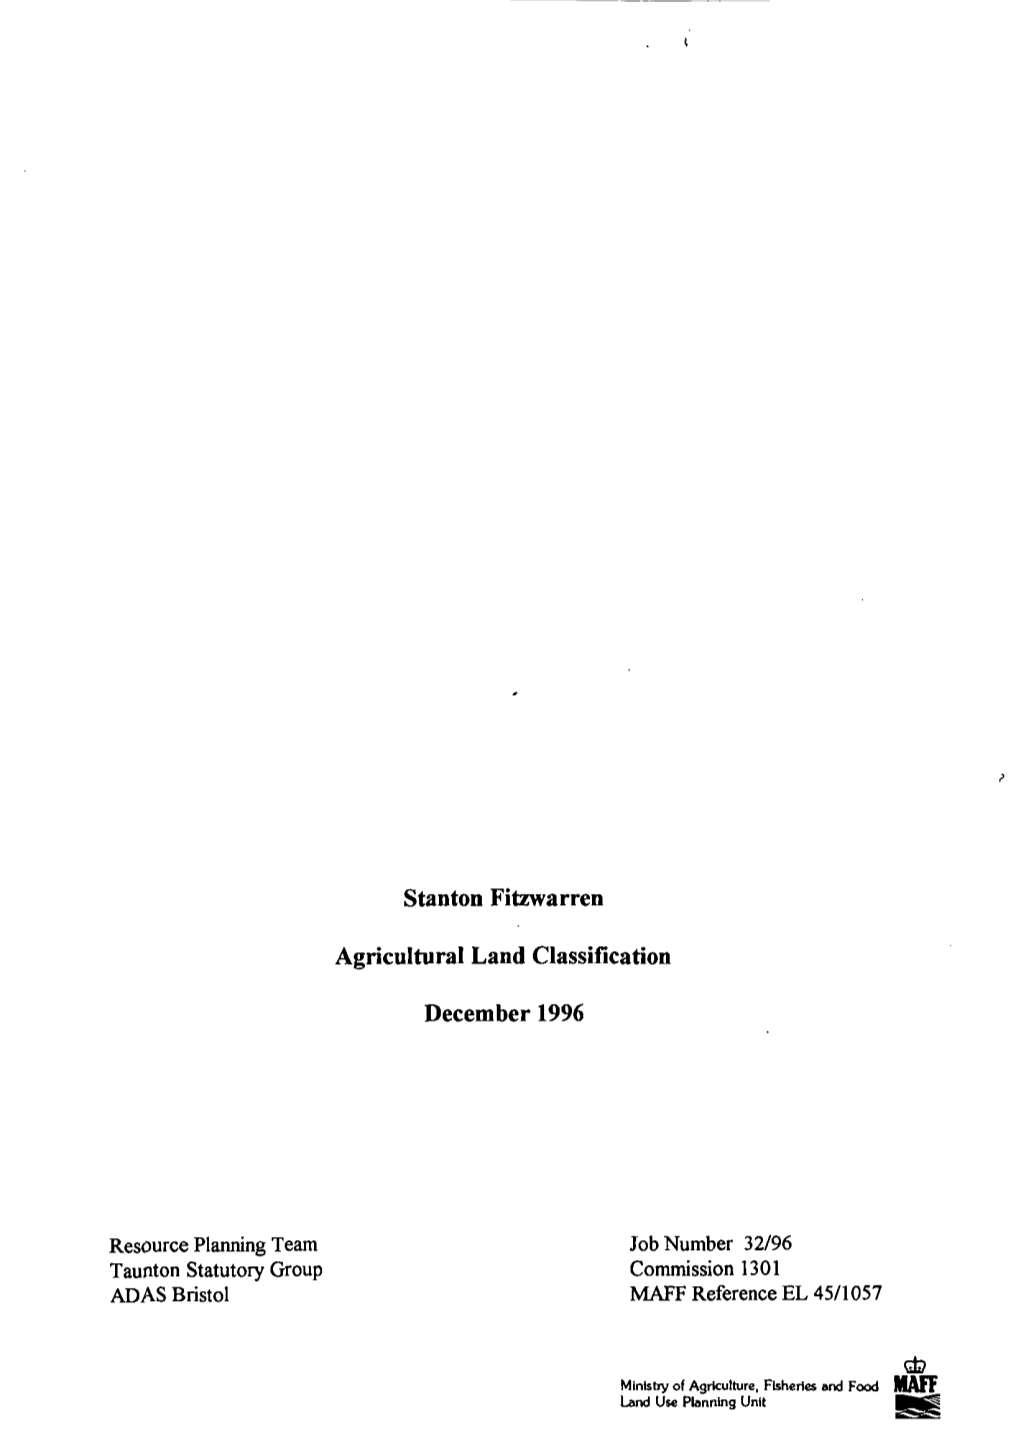 Stanton Fitzwarren Agricultural Land Classification December 1996